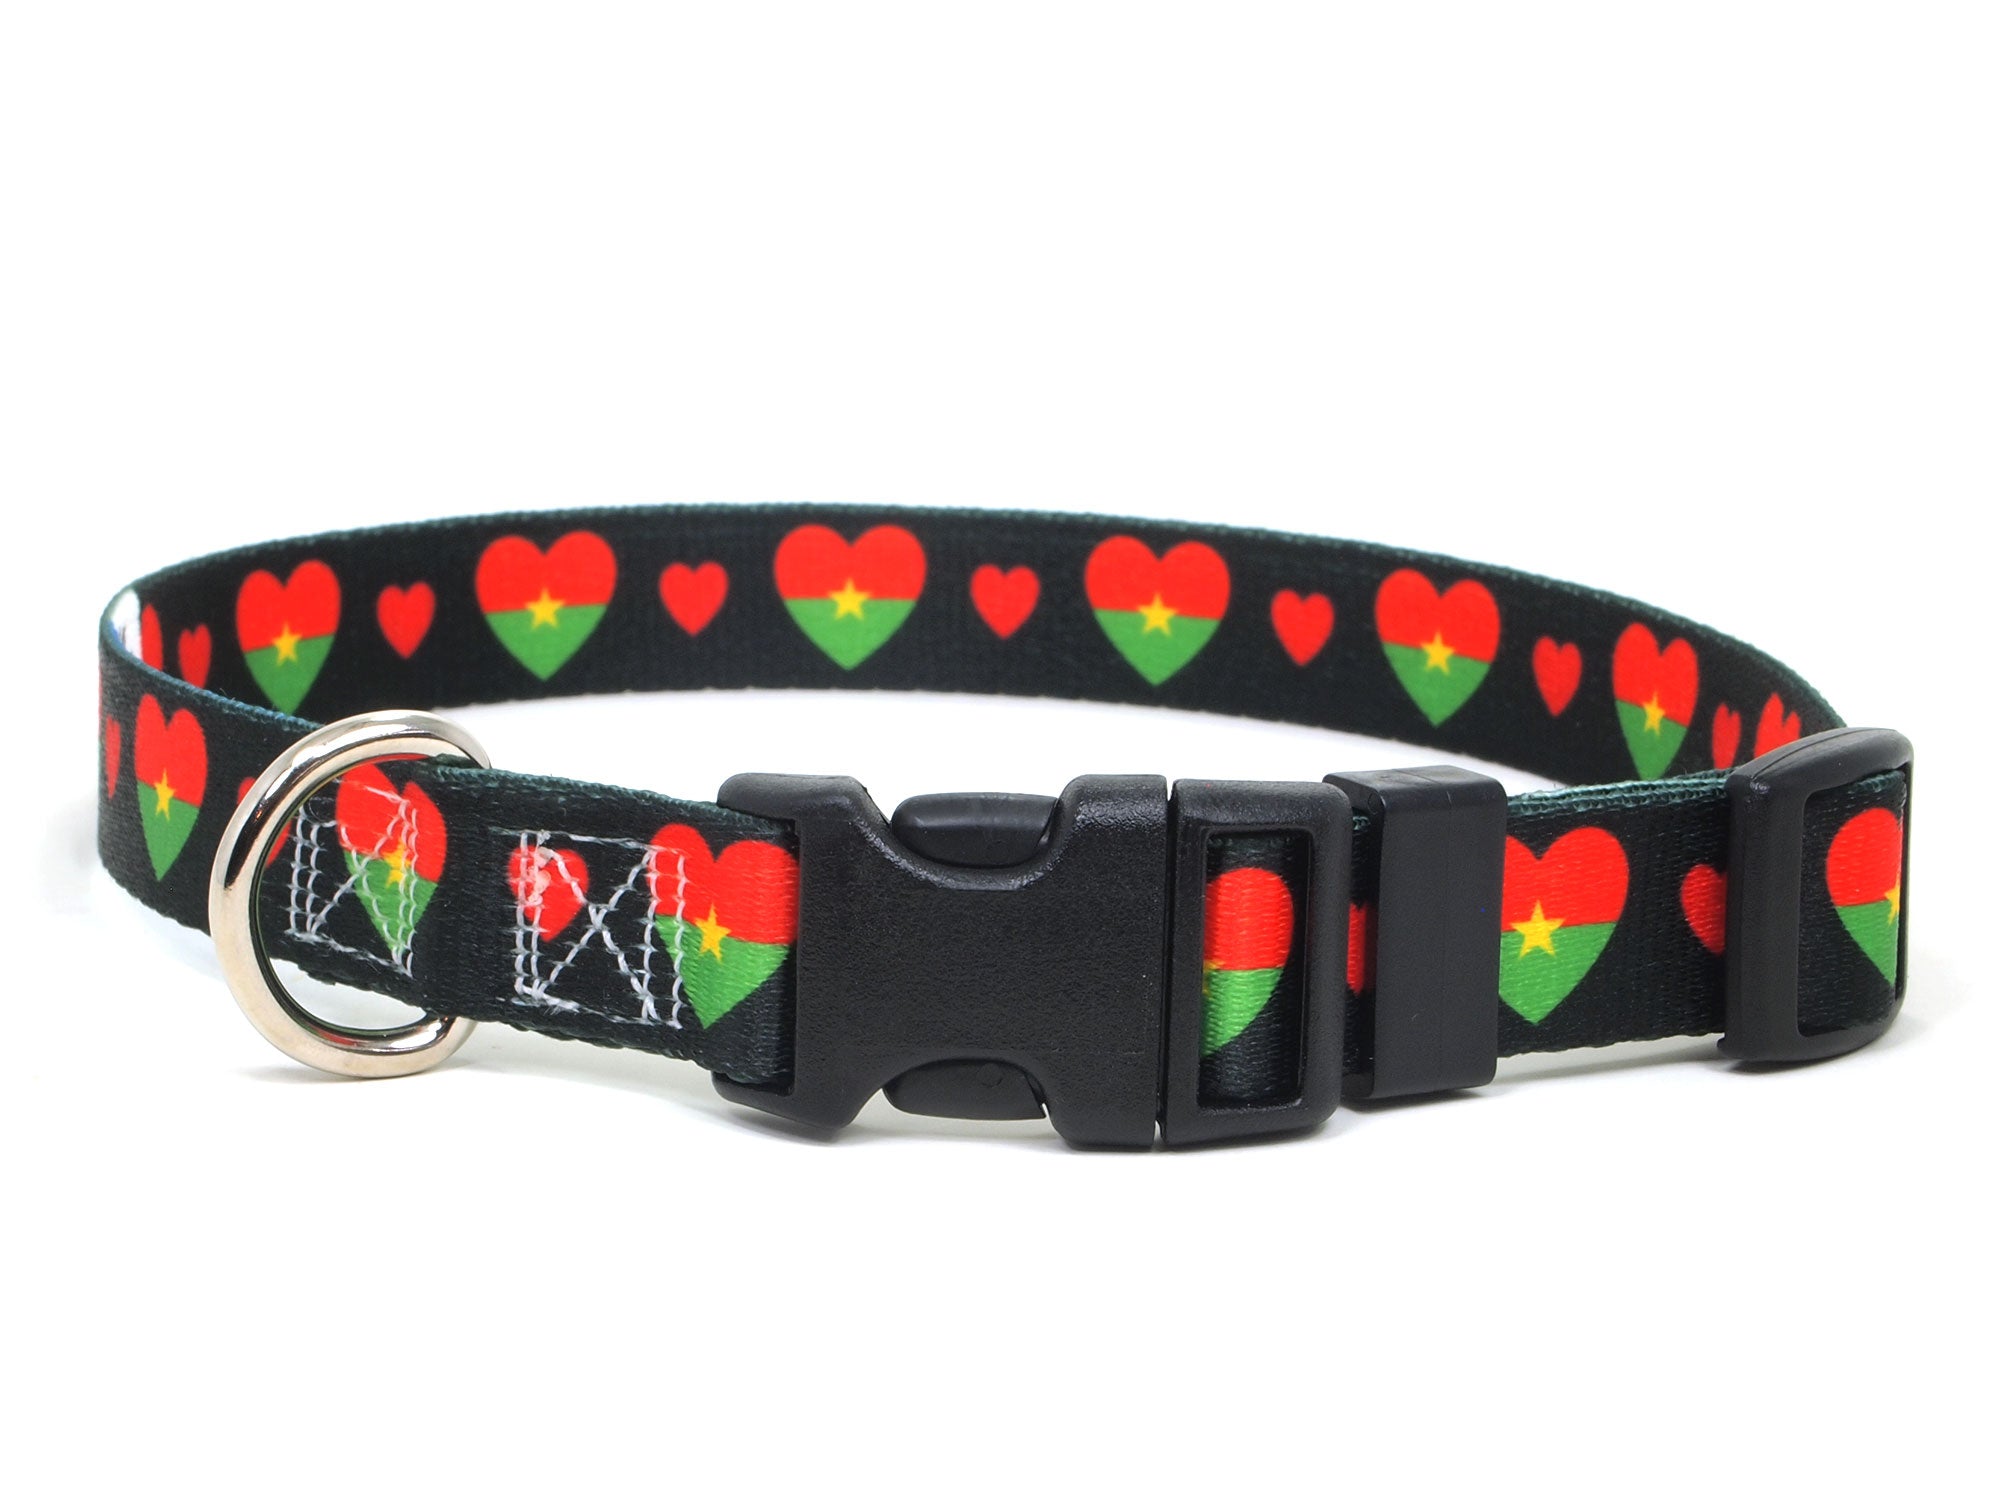 Dog Collar with Burkina Faso Hearts Pattern in black